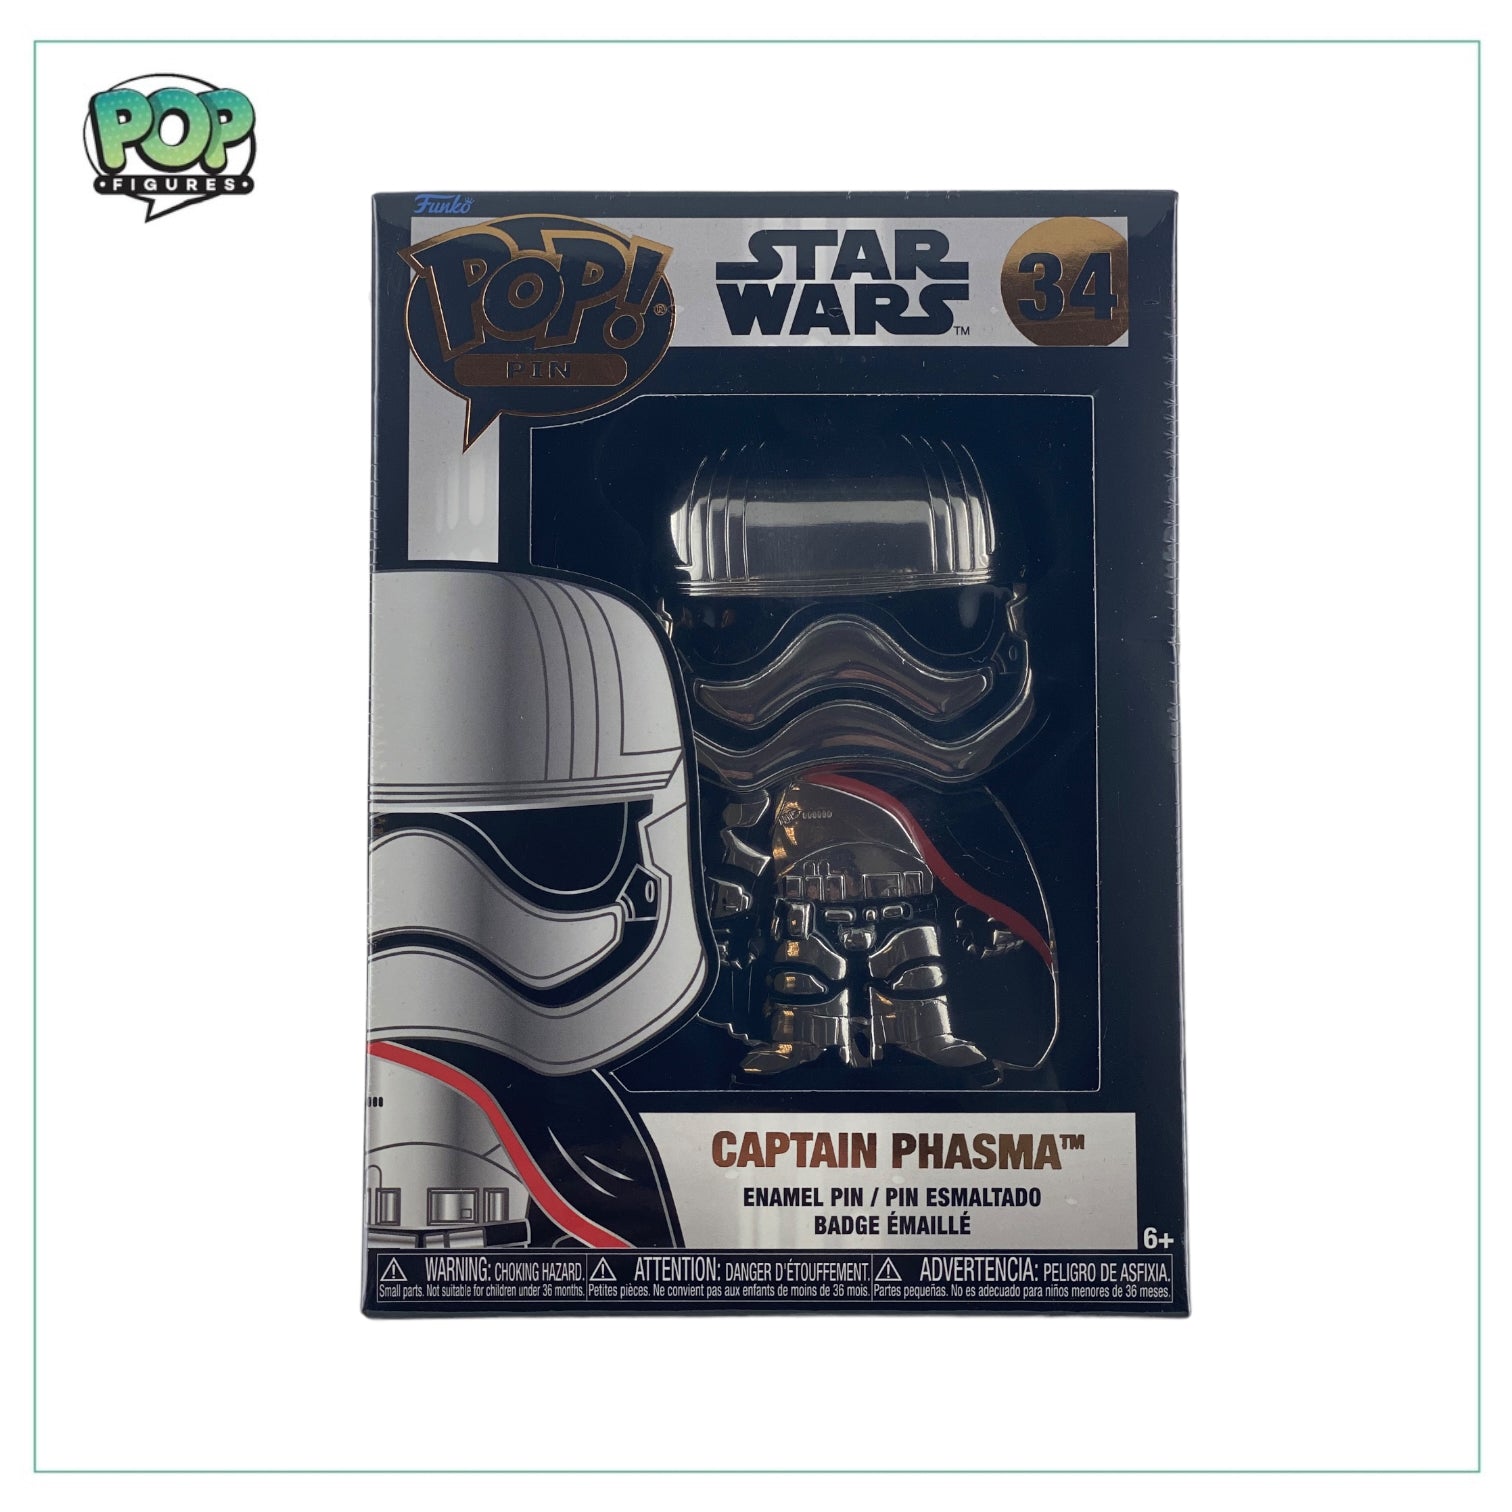 Captain Phasma #34 Enamel Pop Pin - Star Wars